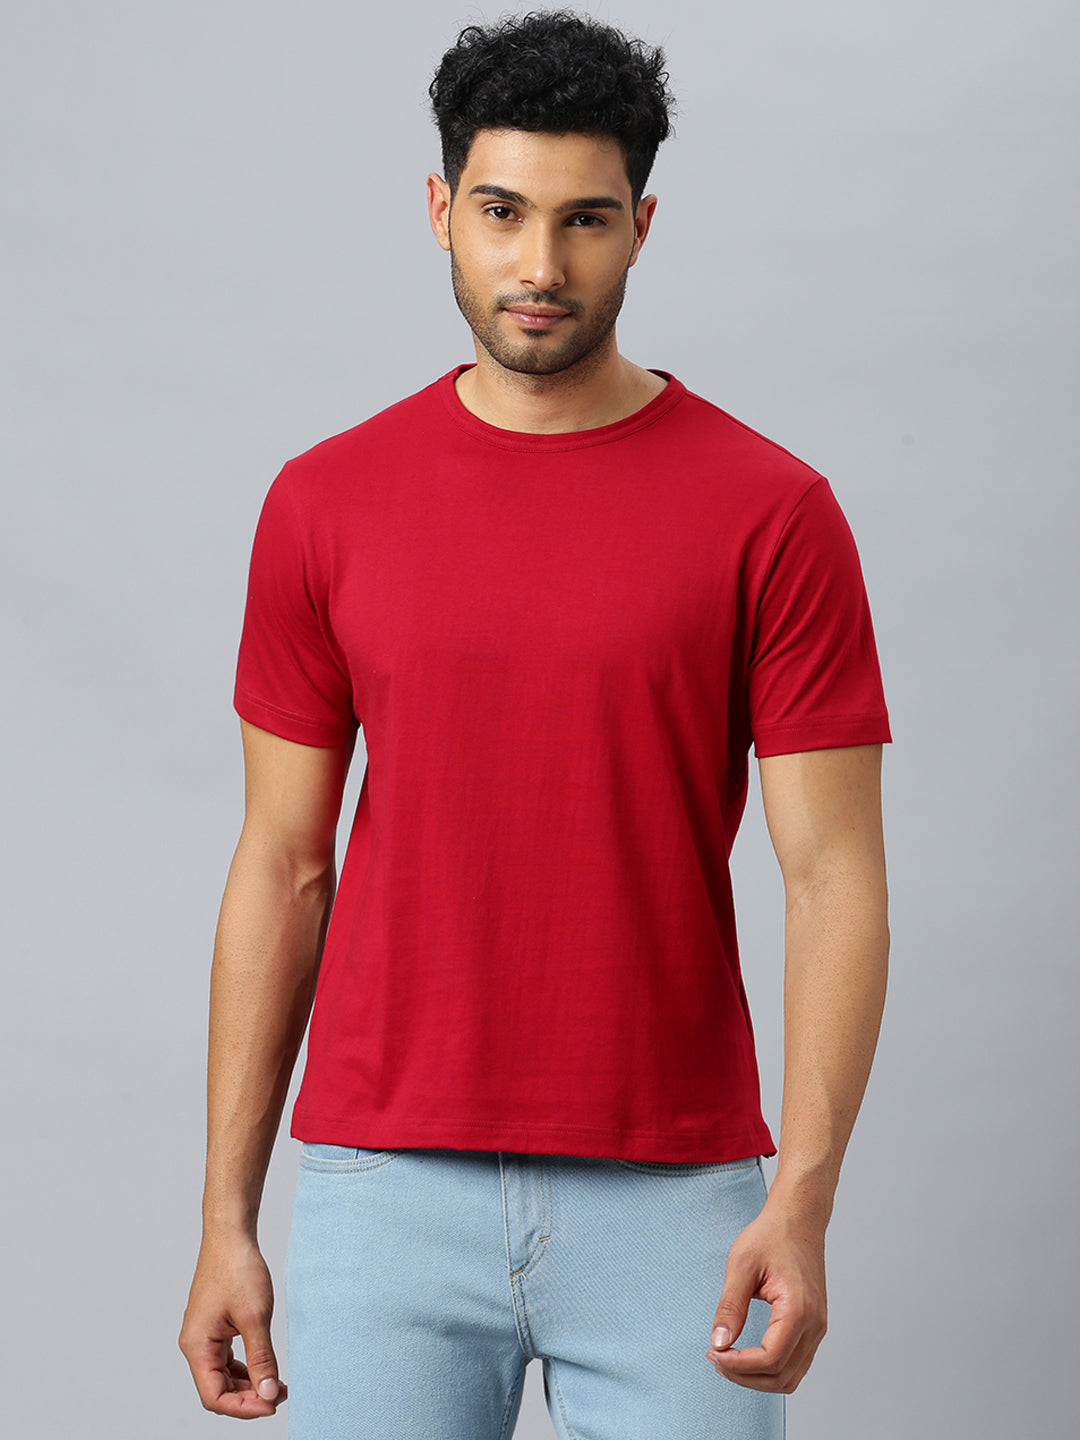 Don Vino Men's Red Solid Crew Neck T-Shirt